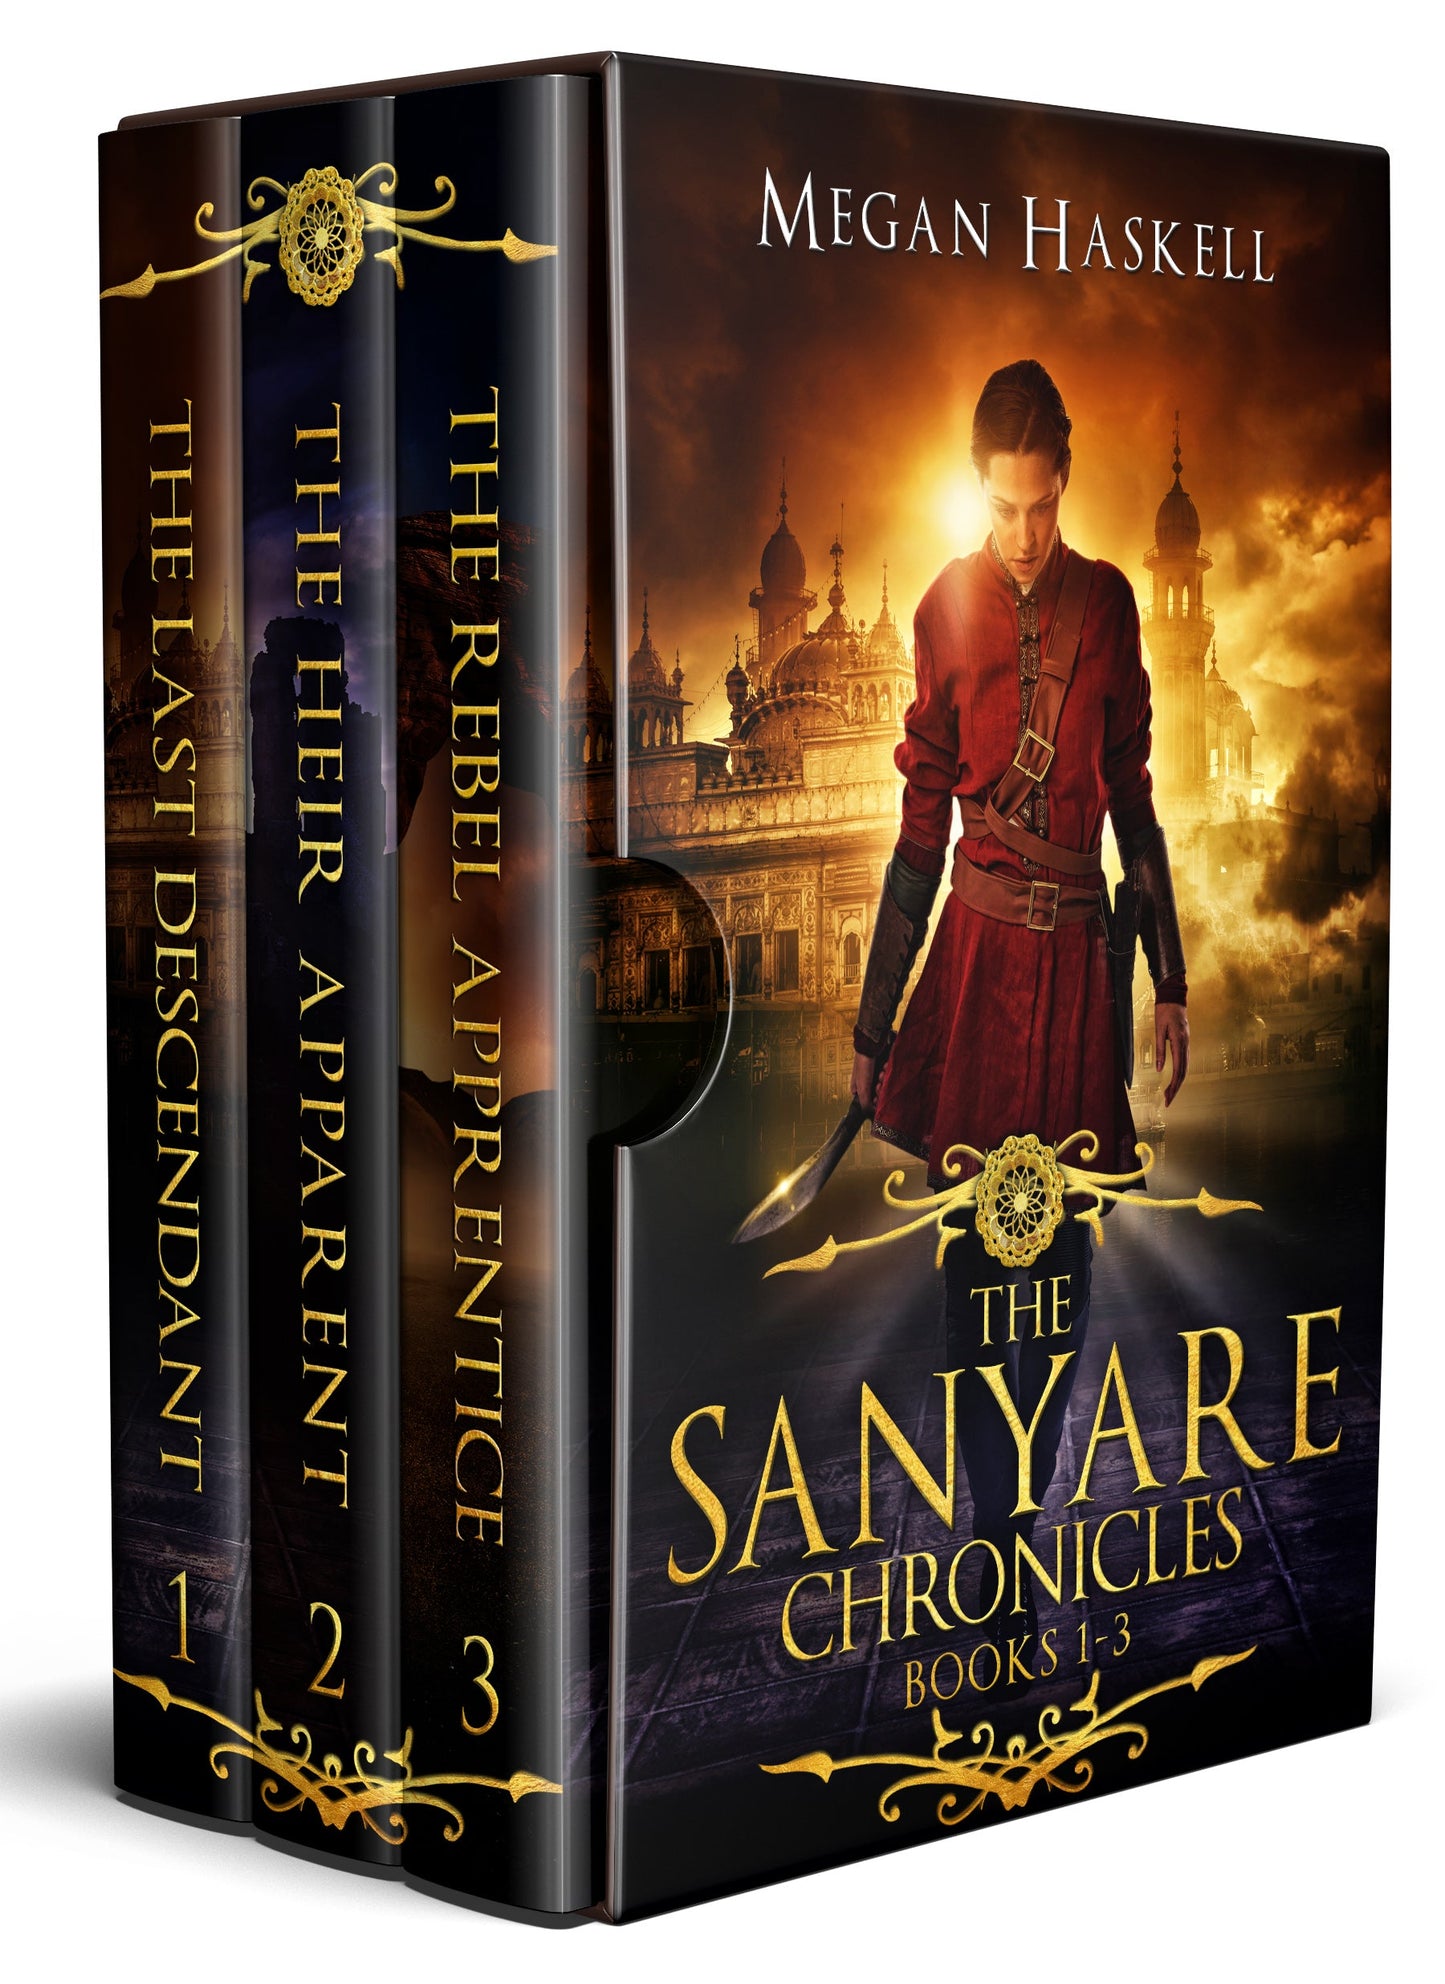 The Sanyare Chronicles Digital Set!